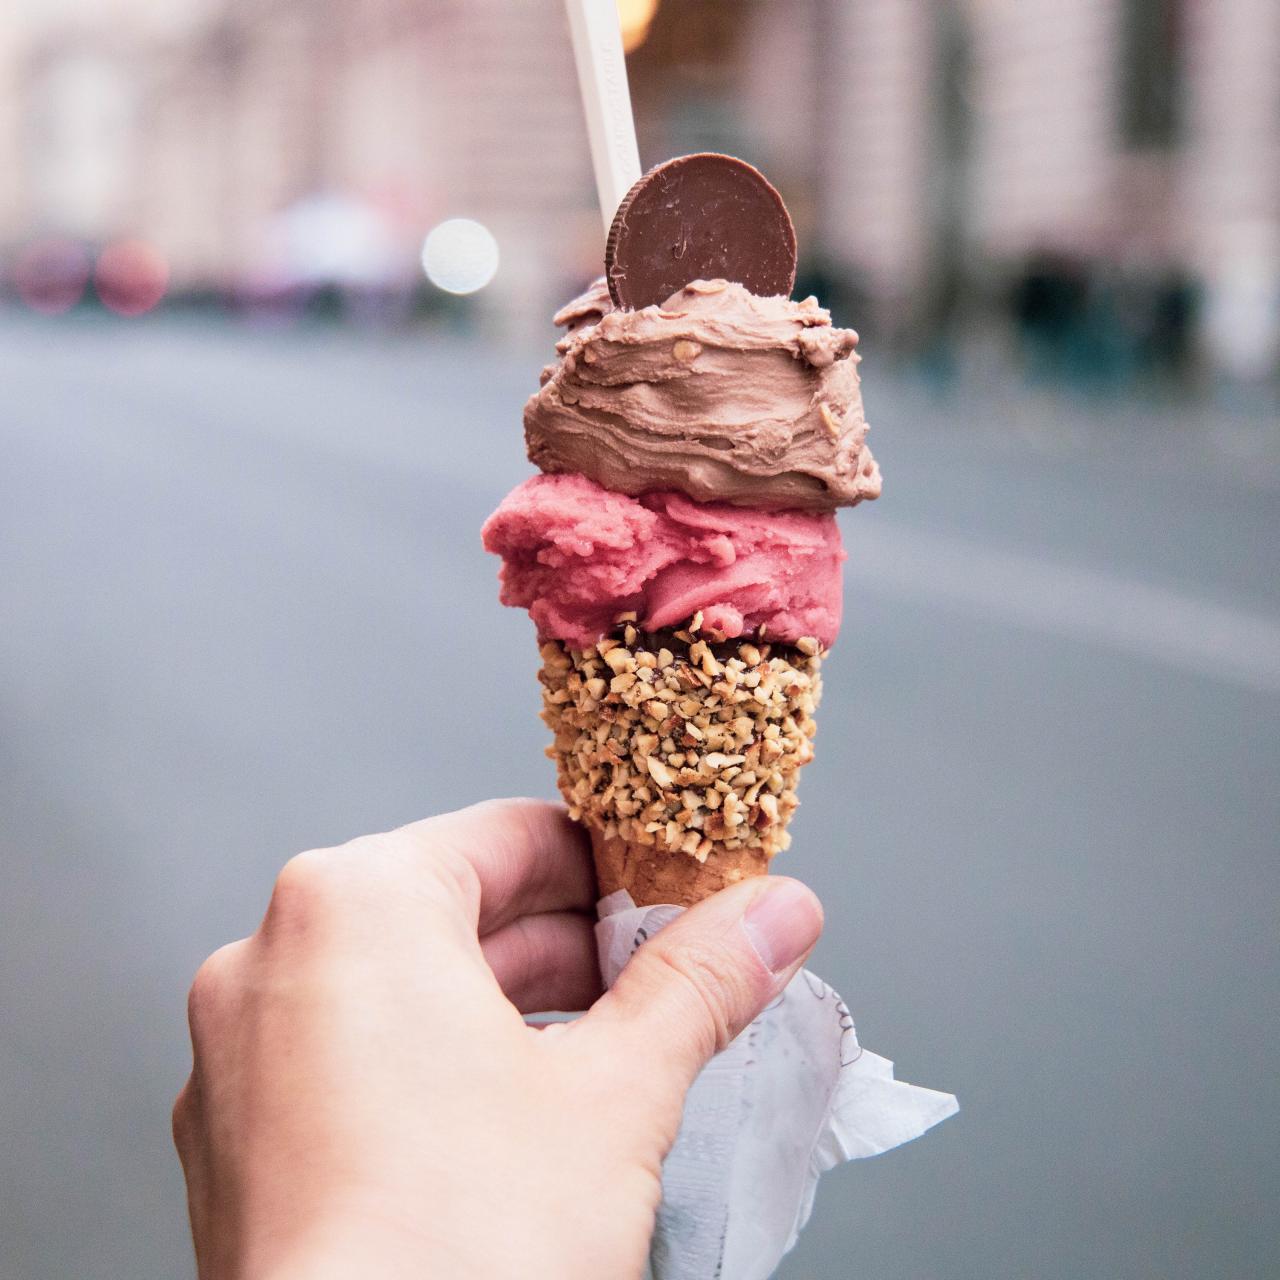 3 Best Ice Cream Makers - Videos by Creamarie Ice Cream Co.